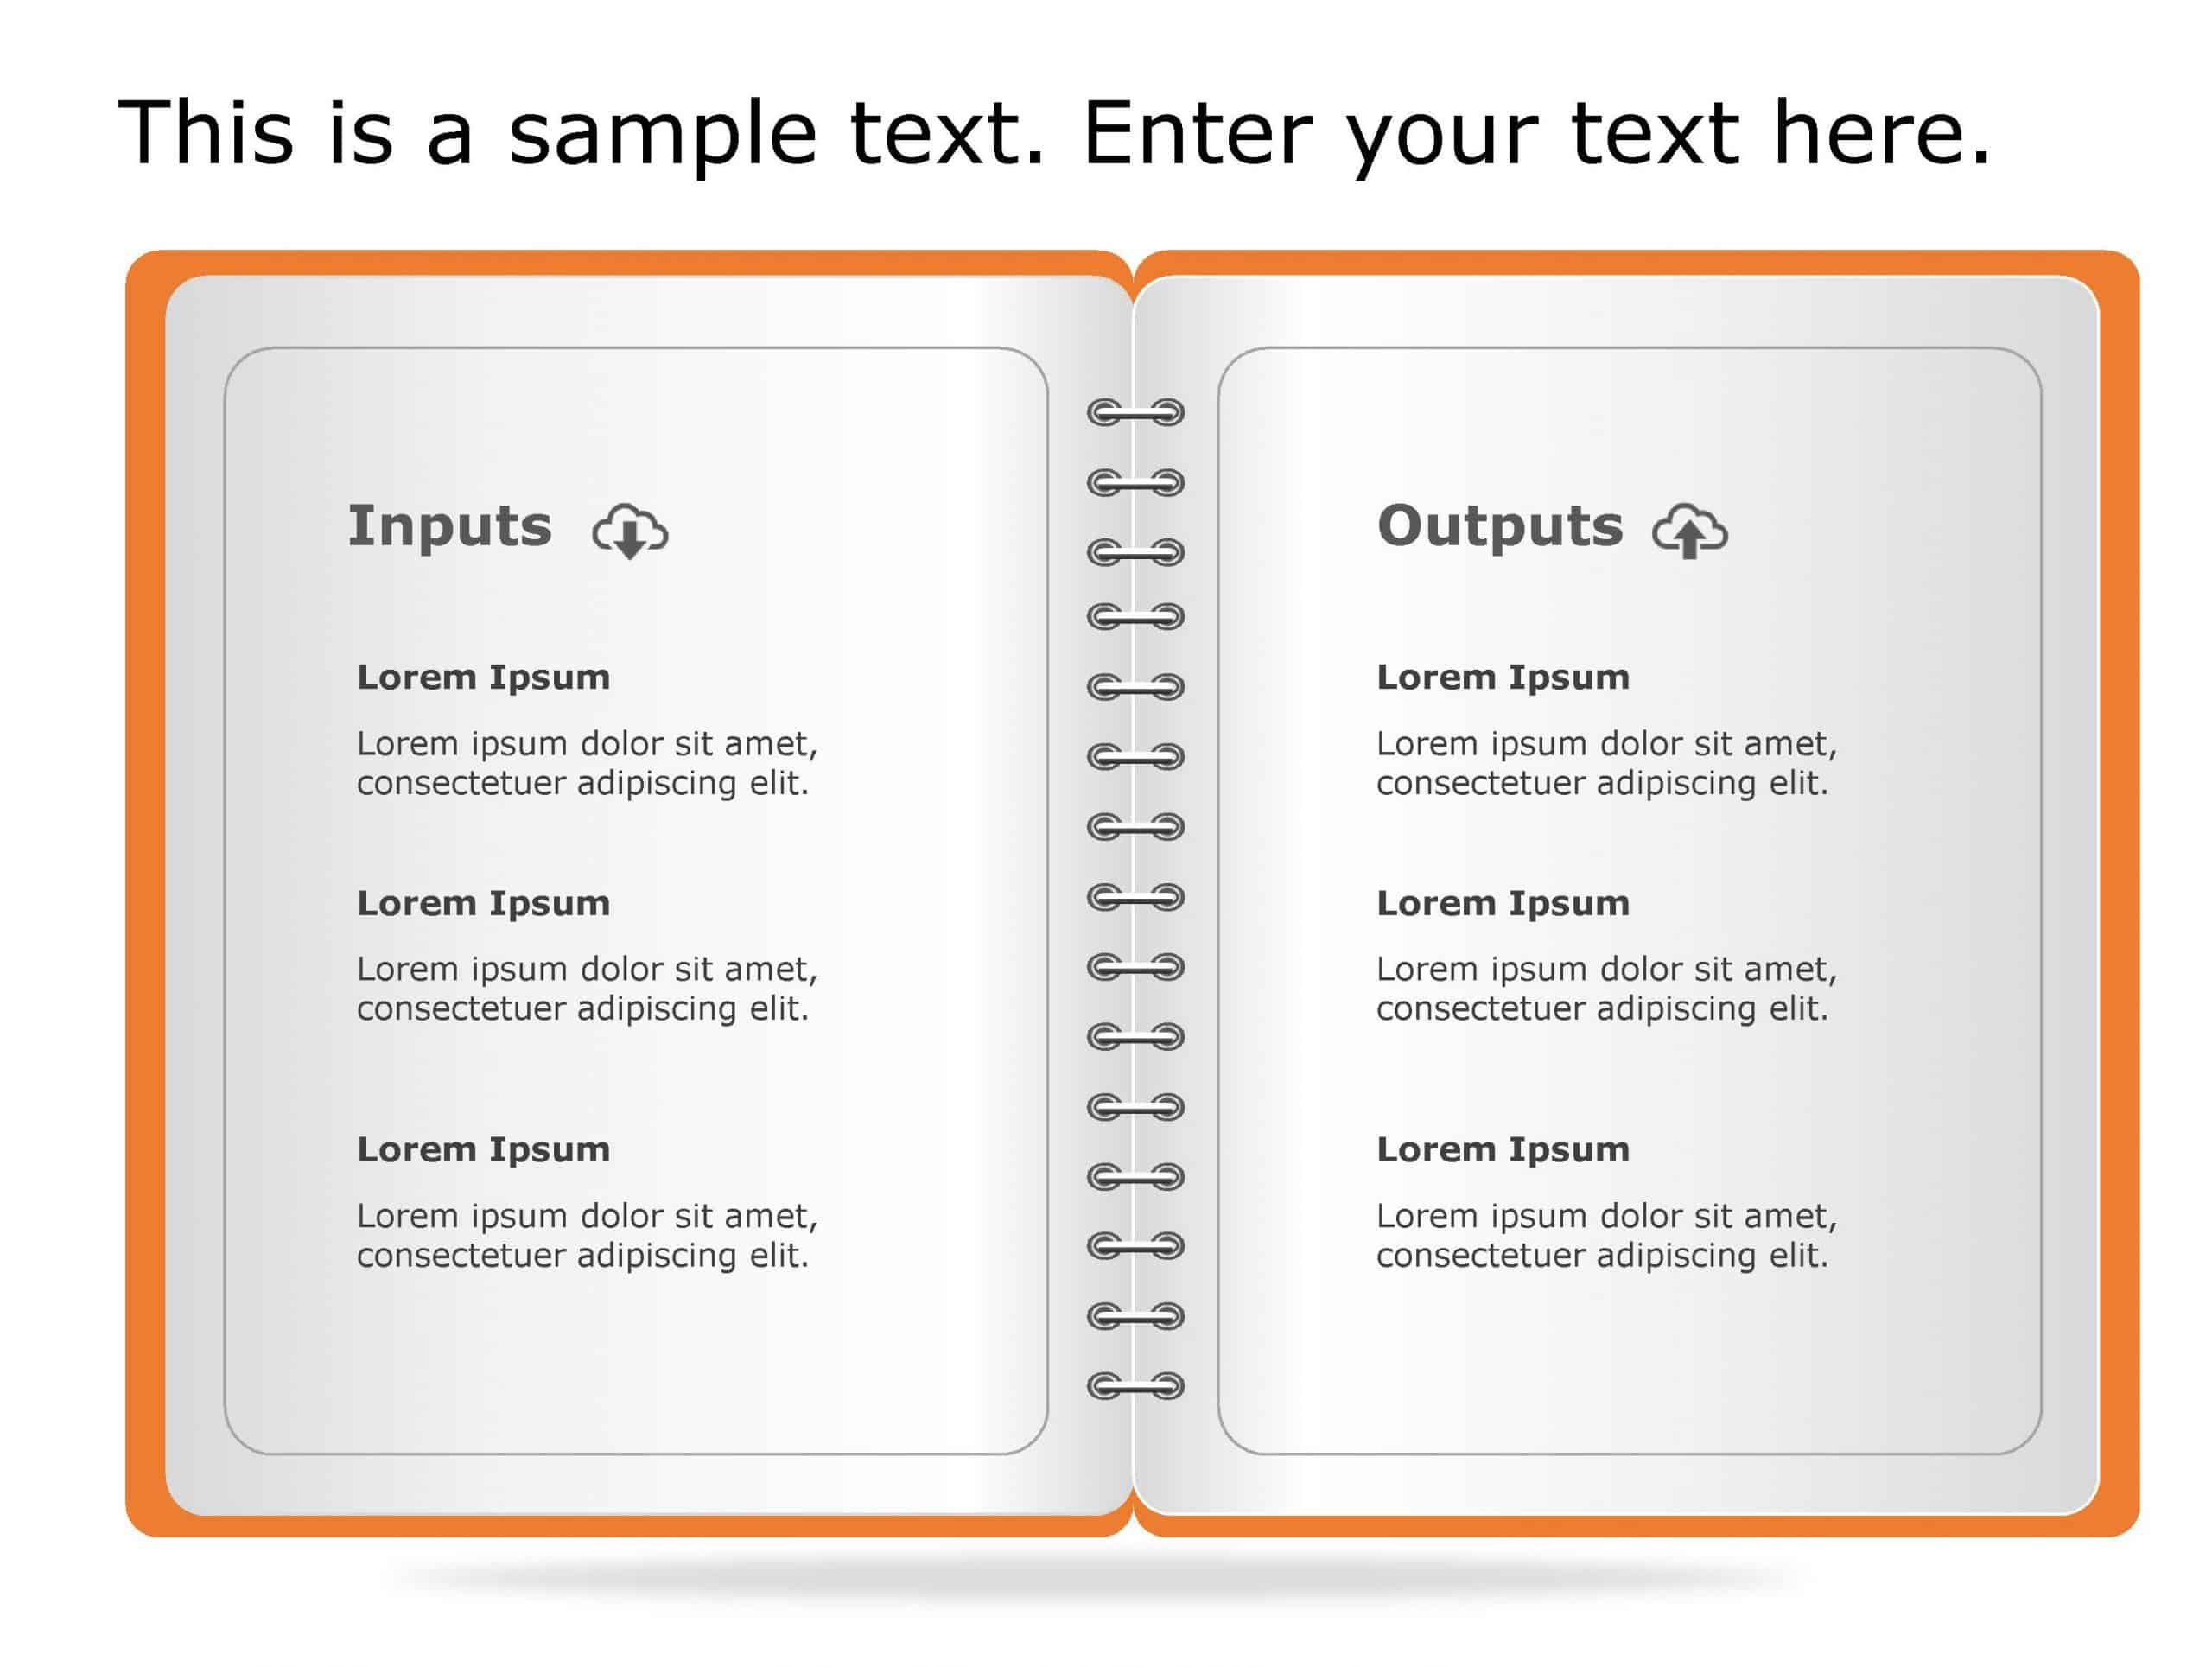 Input Output 55 PowerPoint Template & Google Slides Theme